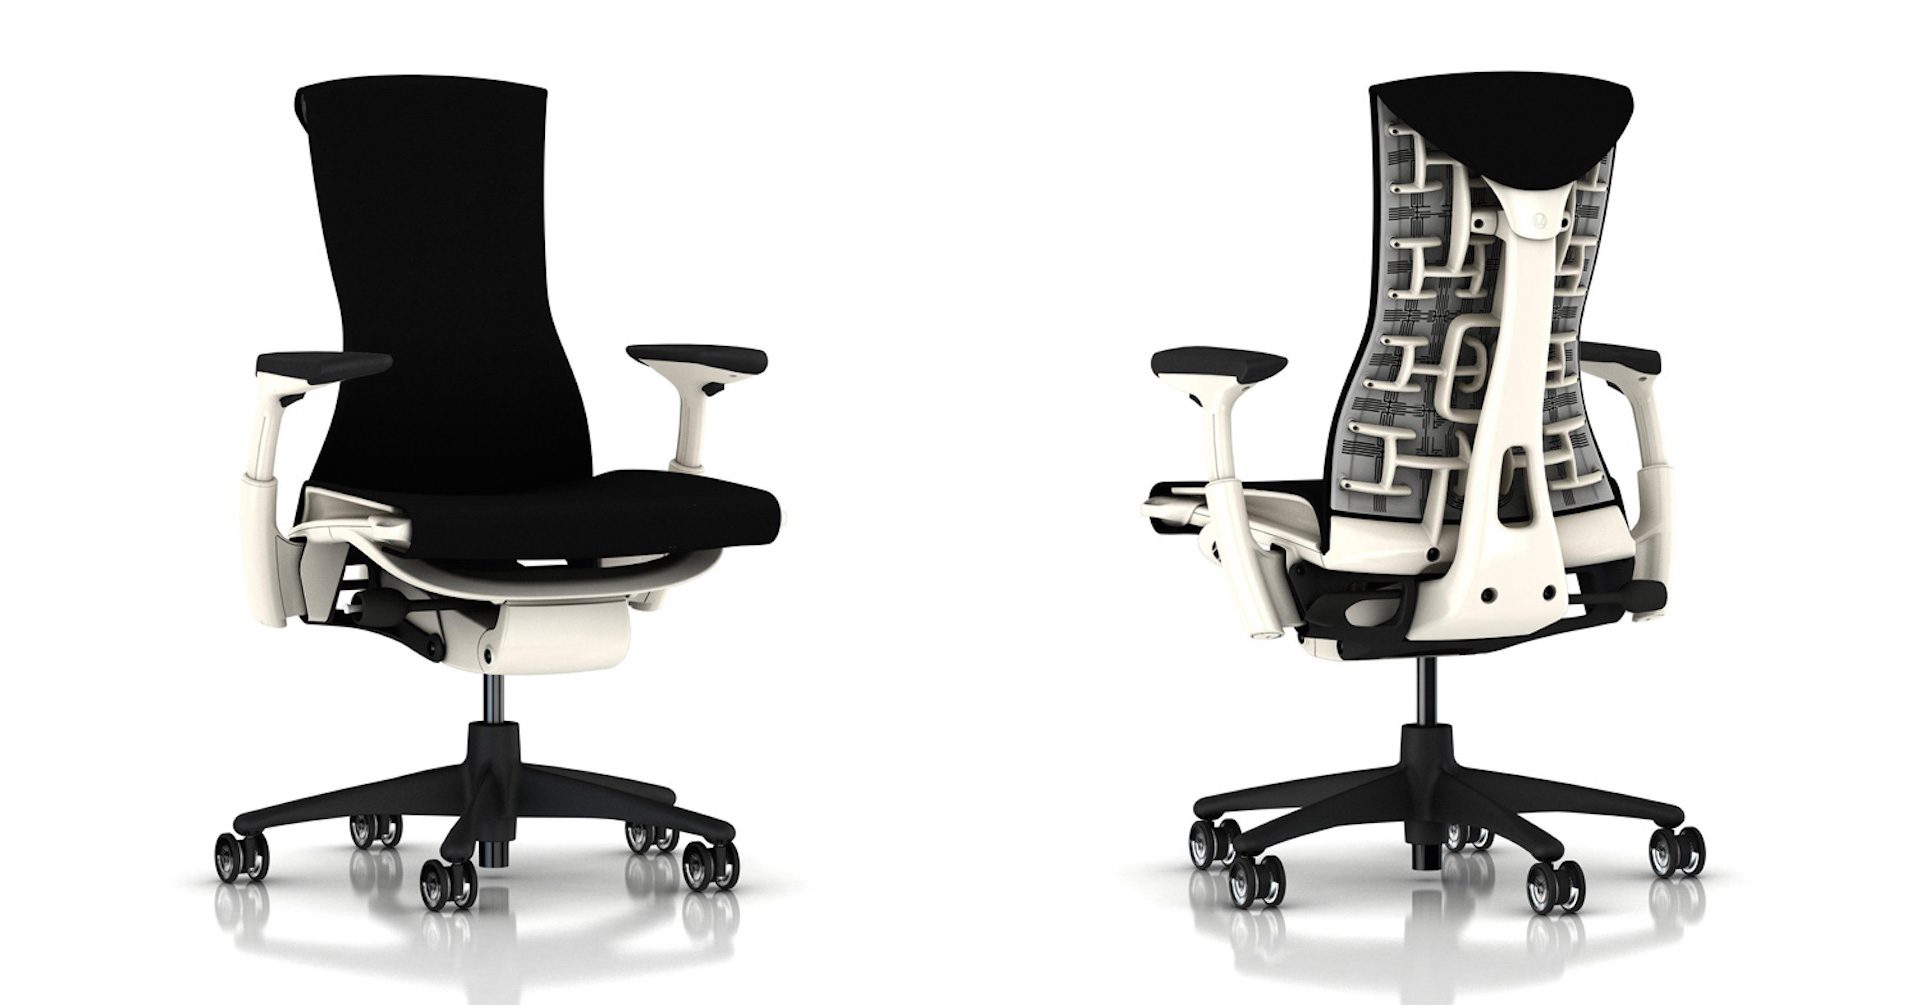 Herman Miller Embody Desk Chair Review - VIV & TIM